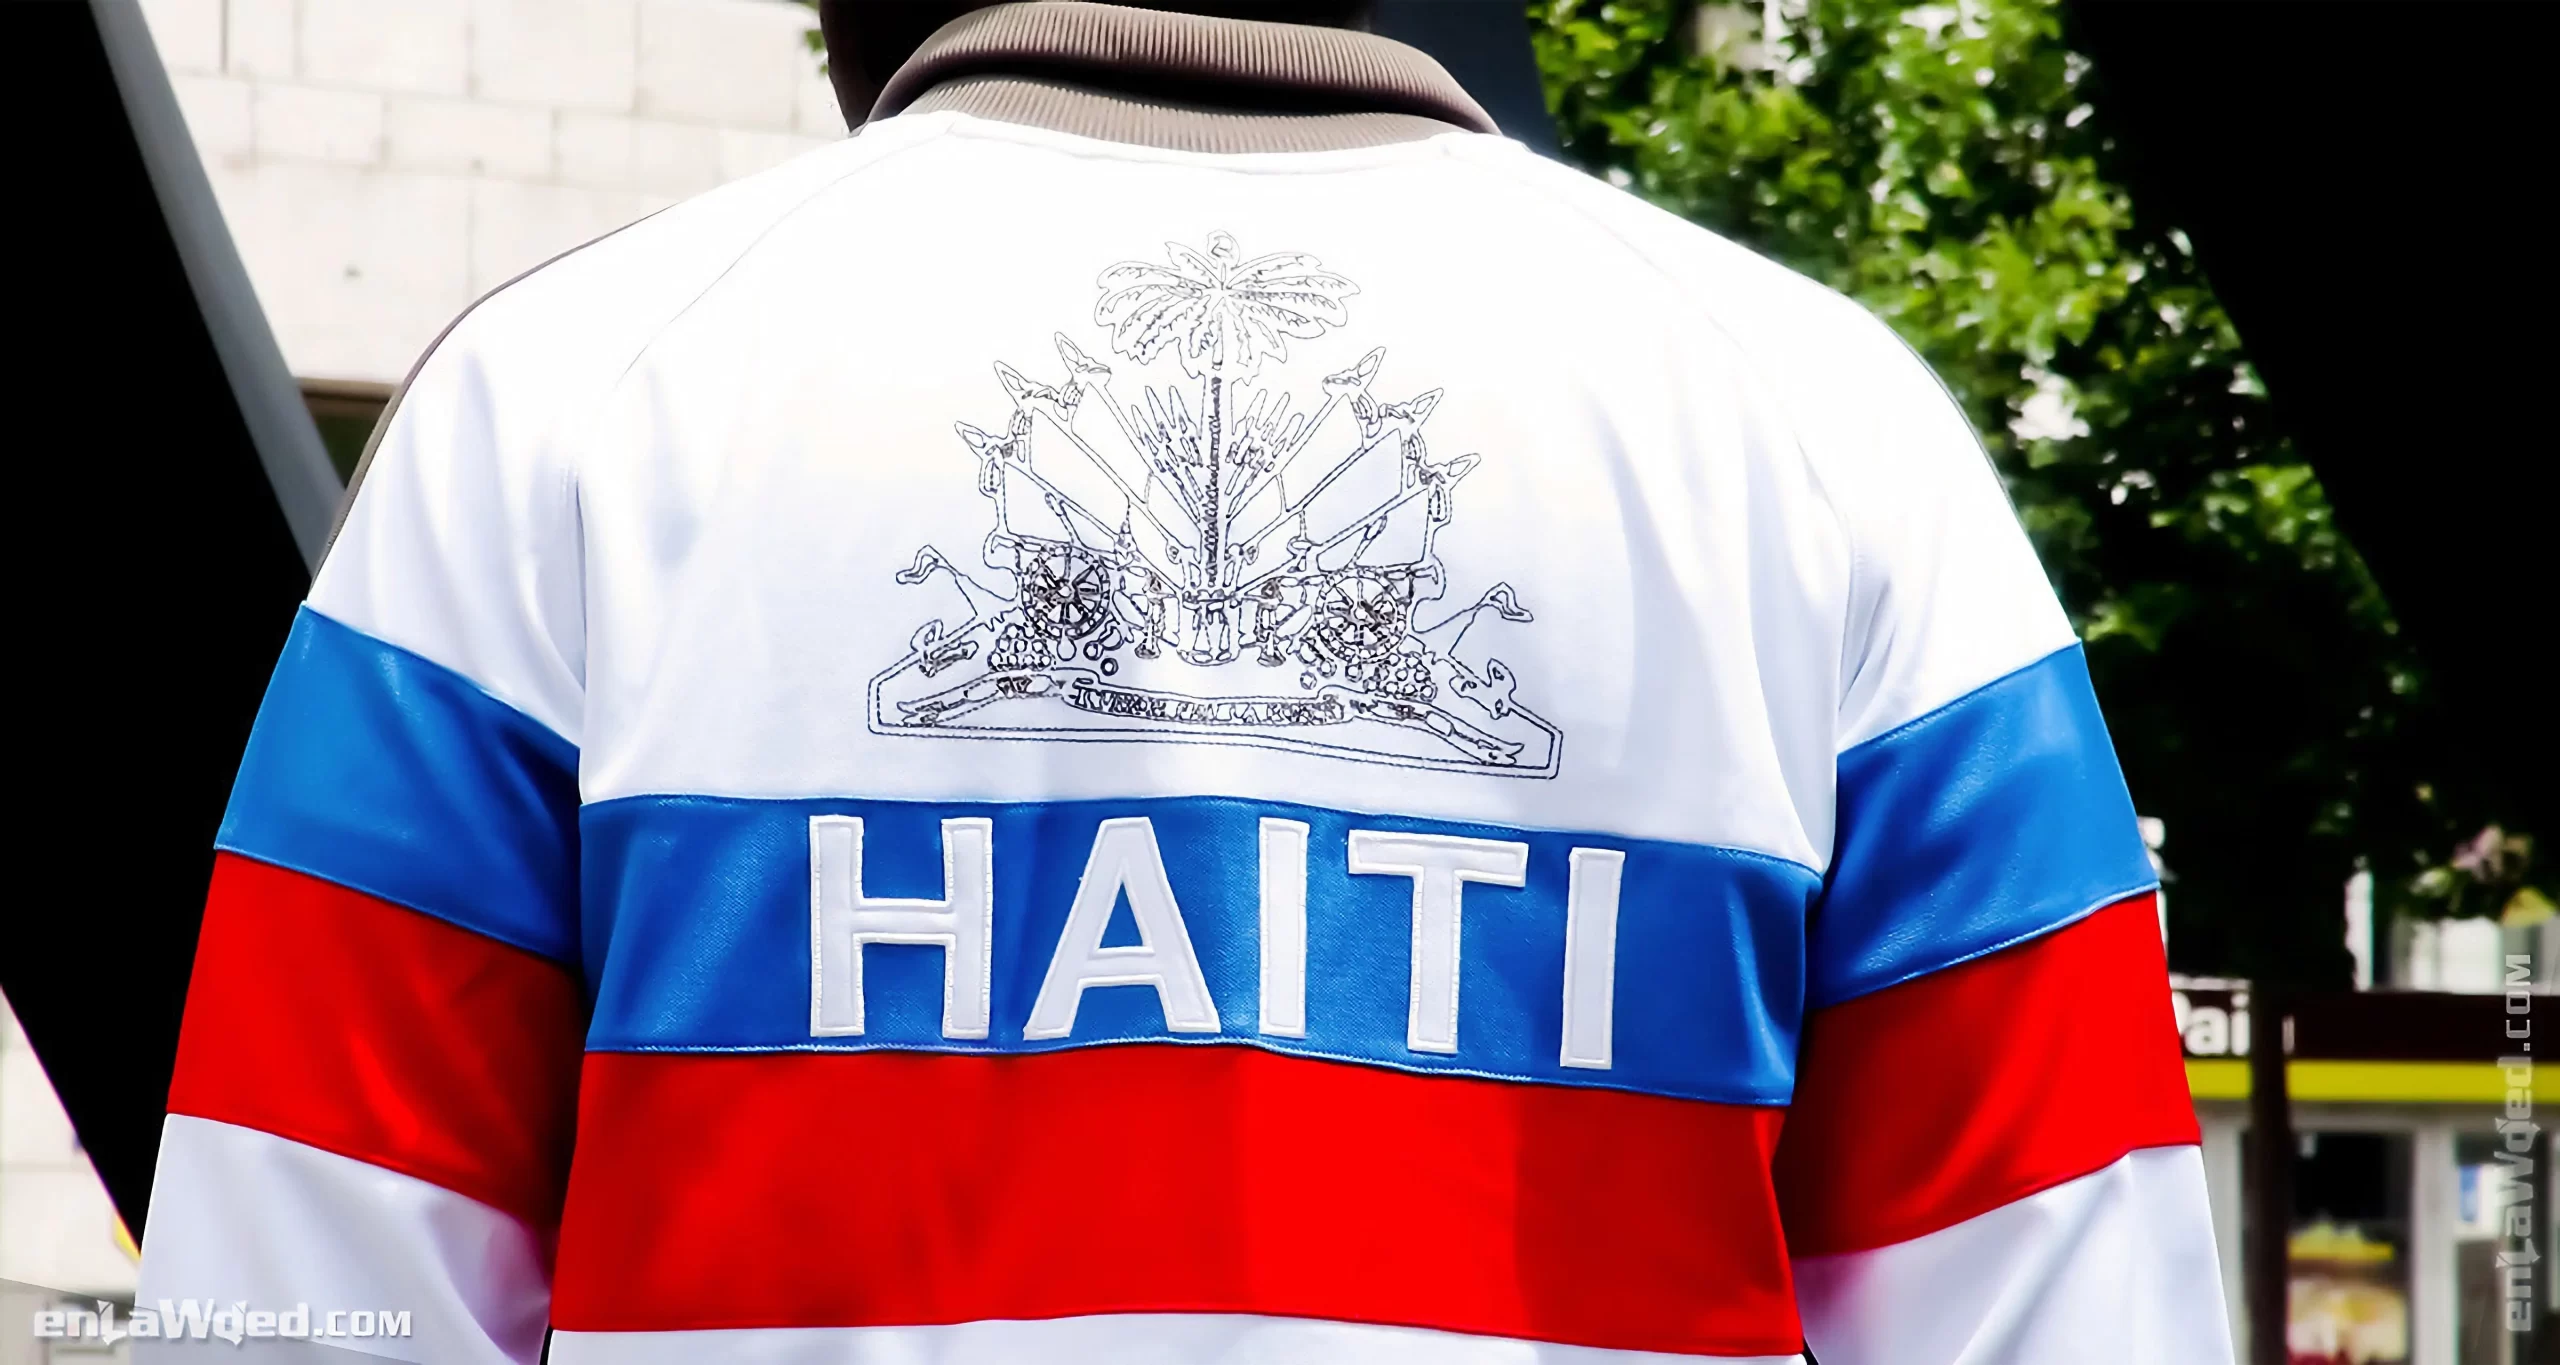 Men’s 2010 Haiti Track Top by Adidas Originals: Radiant (EnLawded.com file #lmchk90071ip2y121748kg9st)